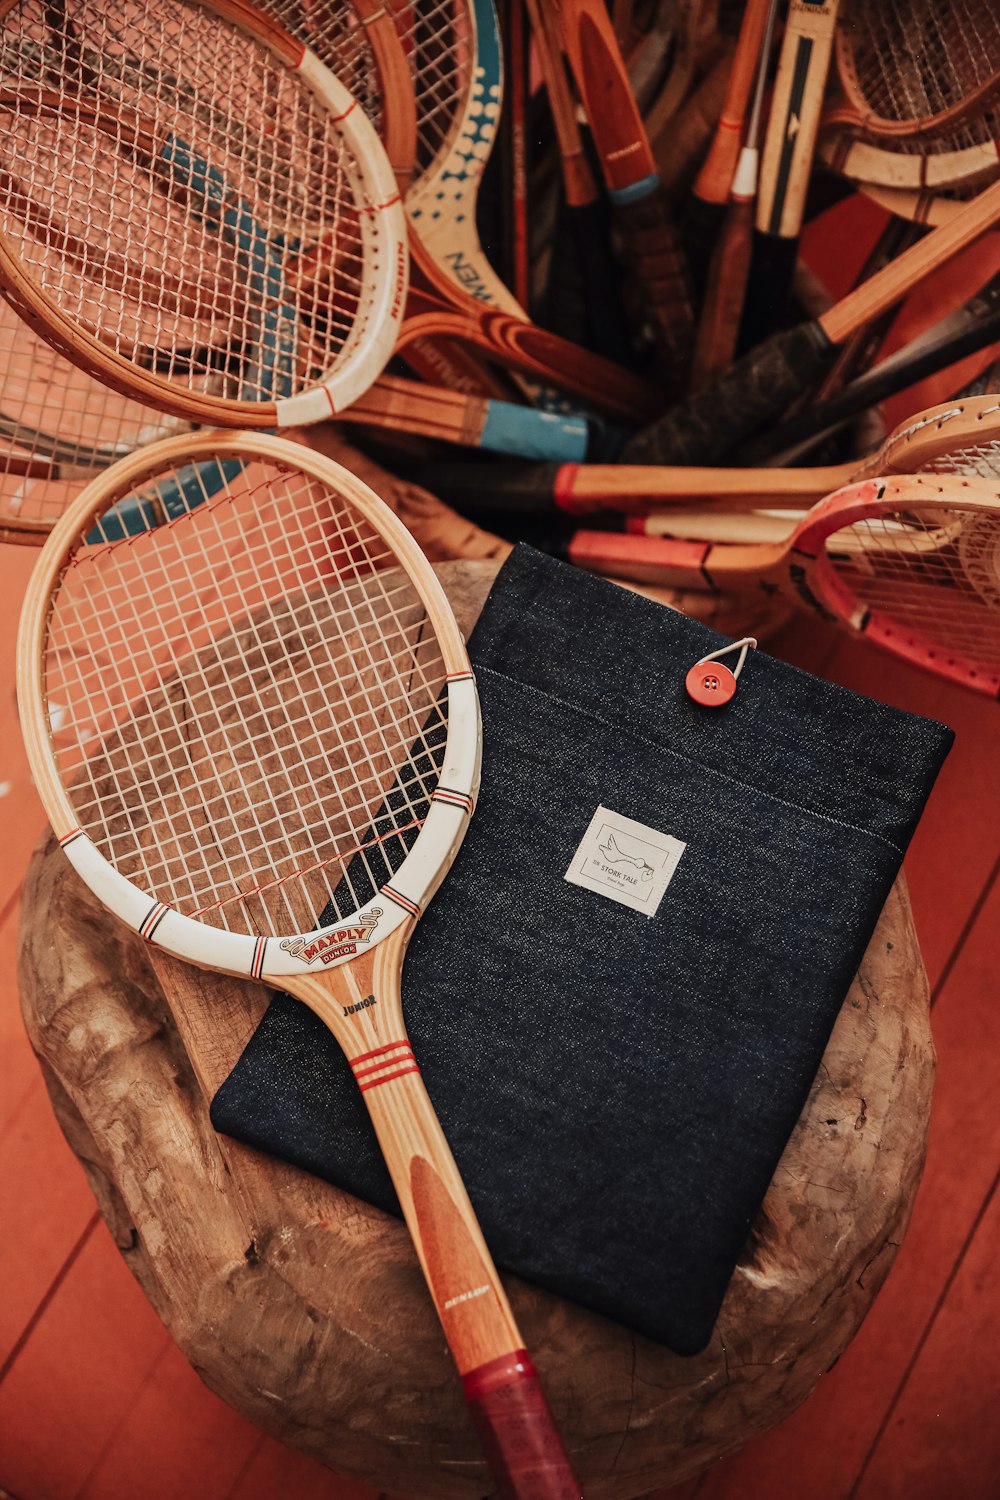 a tennis racket and a bag